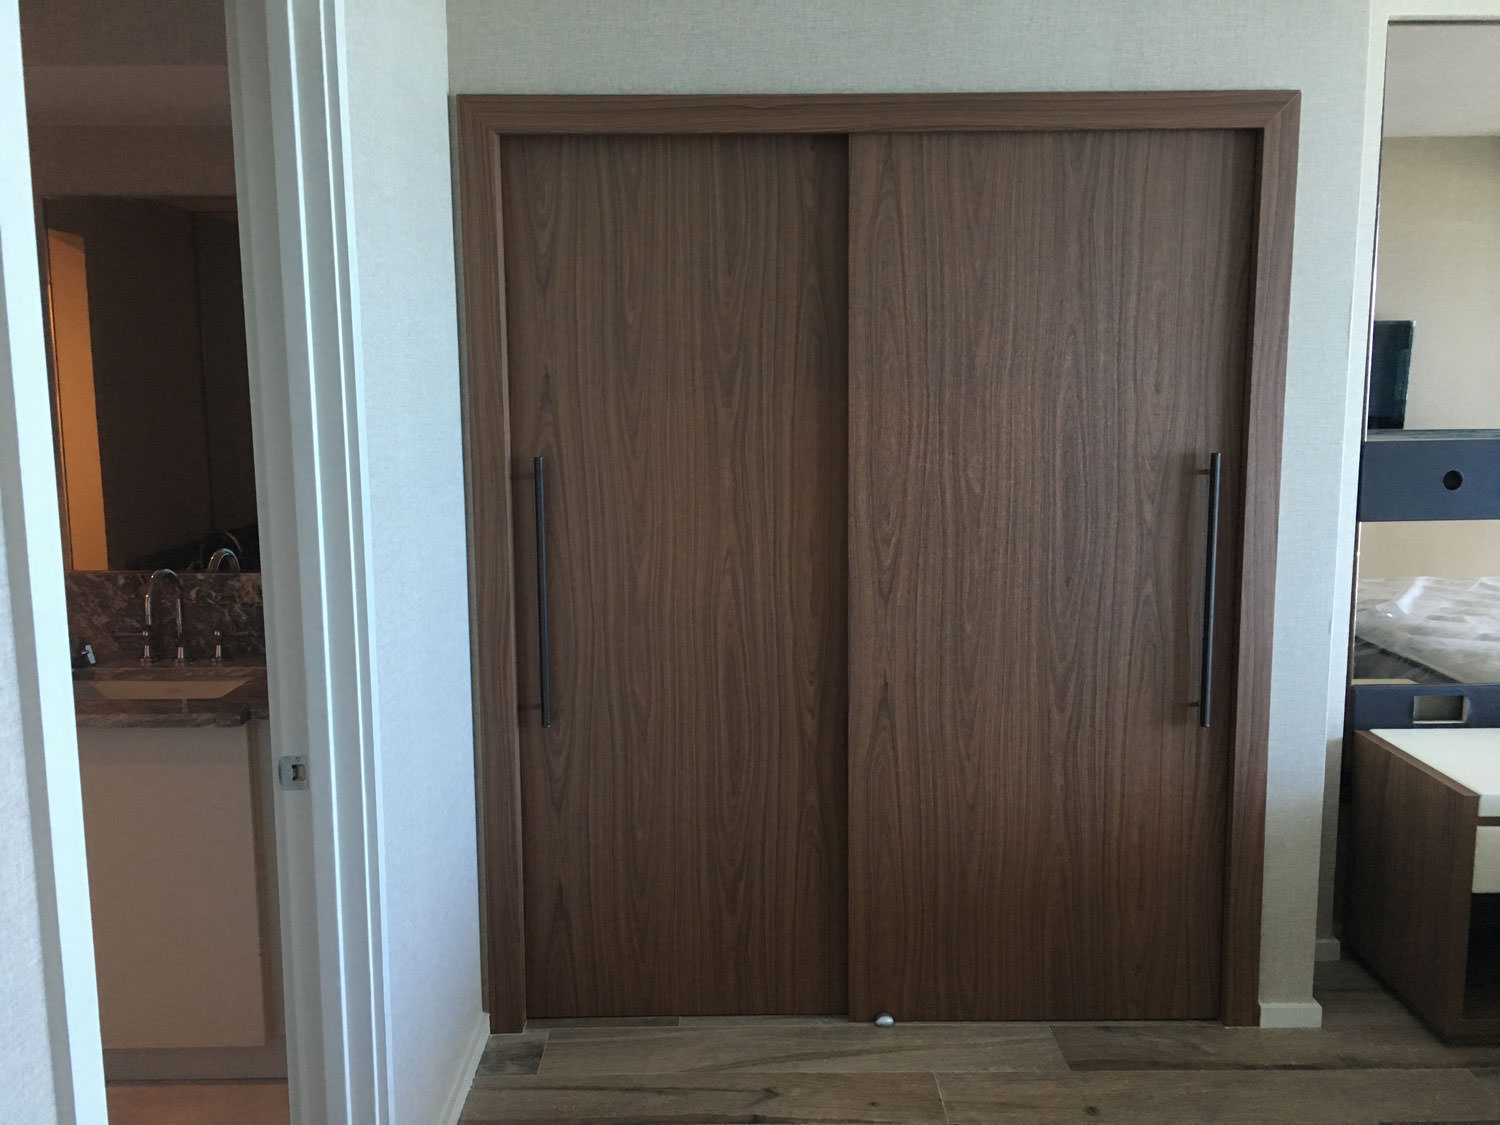 https://blueprintdoors.com/wp-content/uploads/2022/06/custom-wood-melamine-modern-closet-door-1.jpg